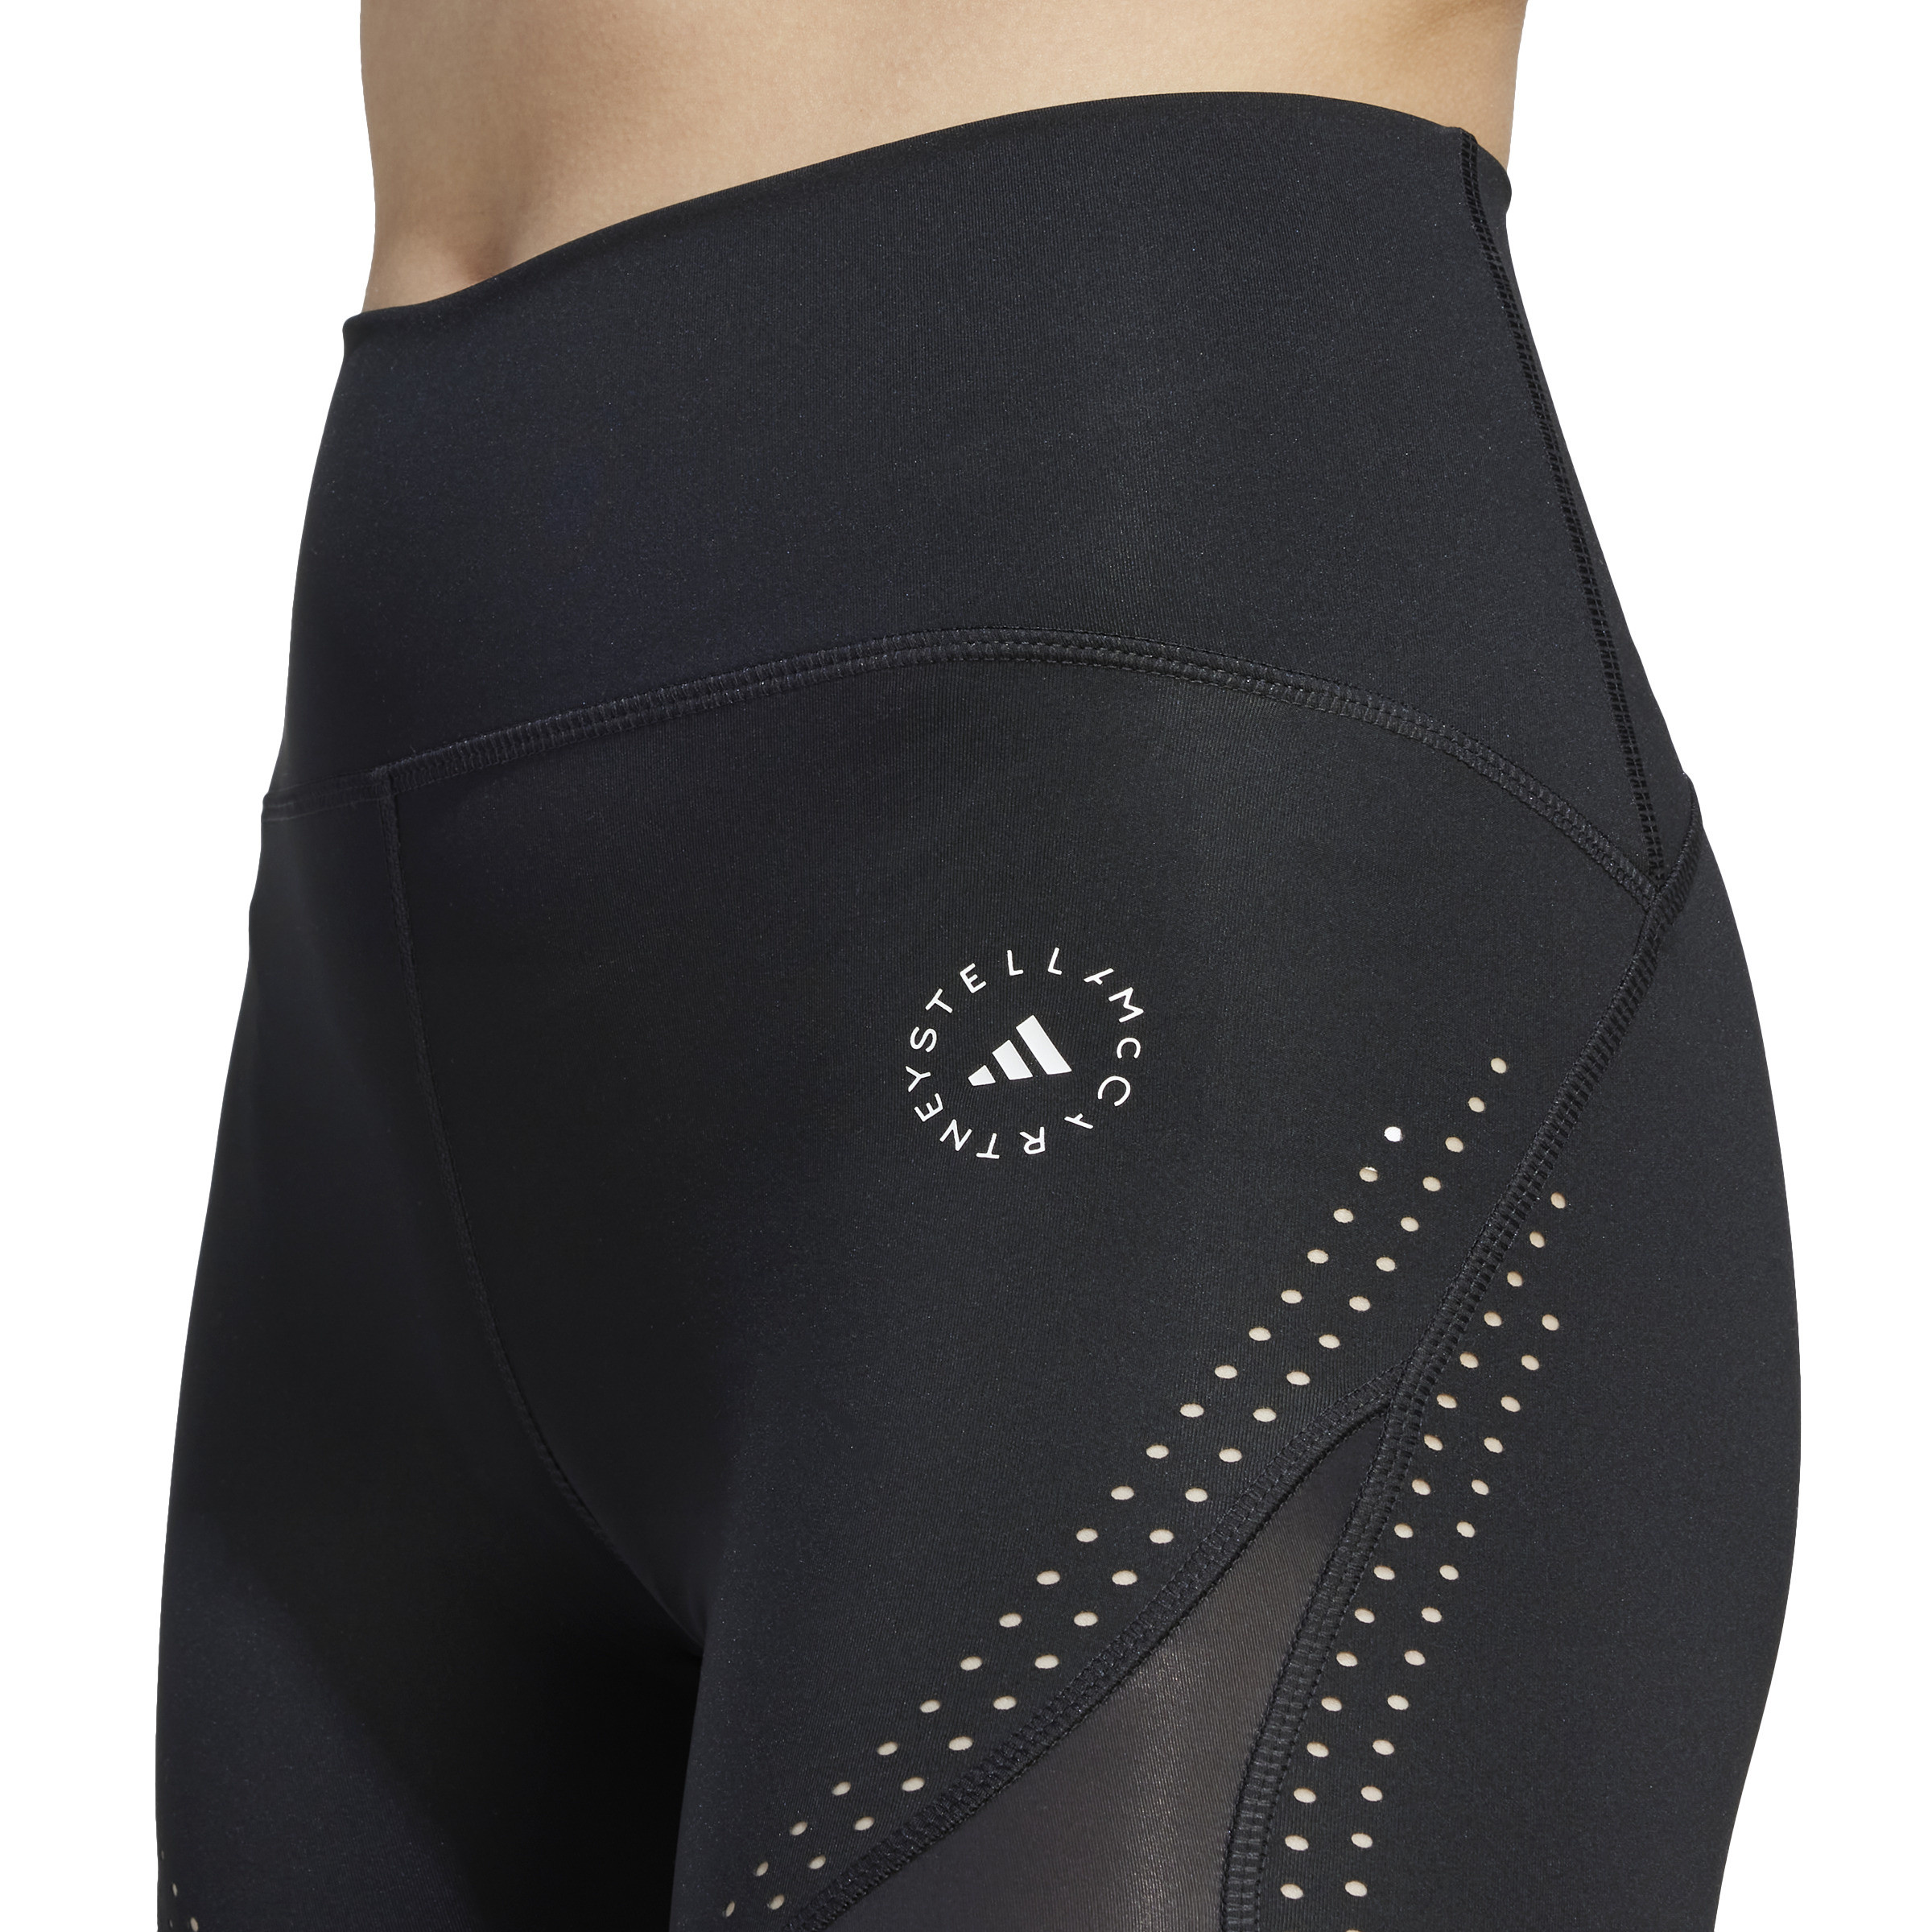 Adidas by Stella McCartney - TruePurpose Optime Bike Training Leggings, Black, large image number 3